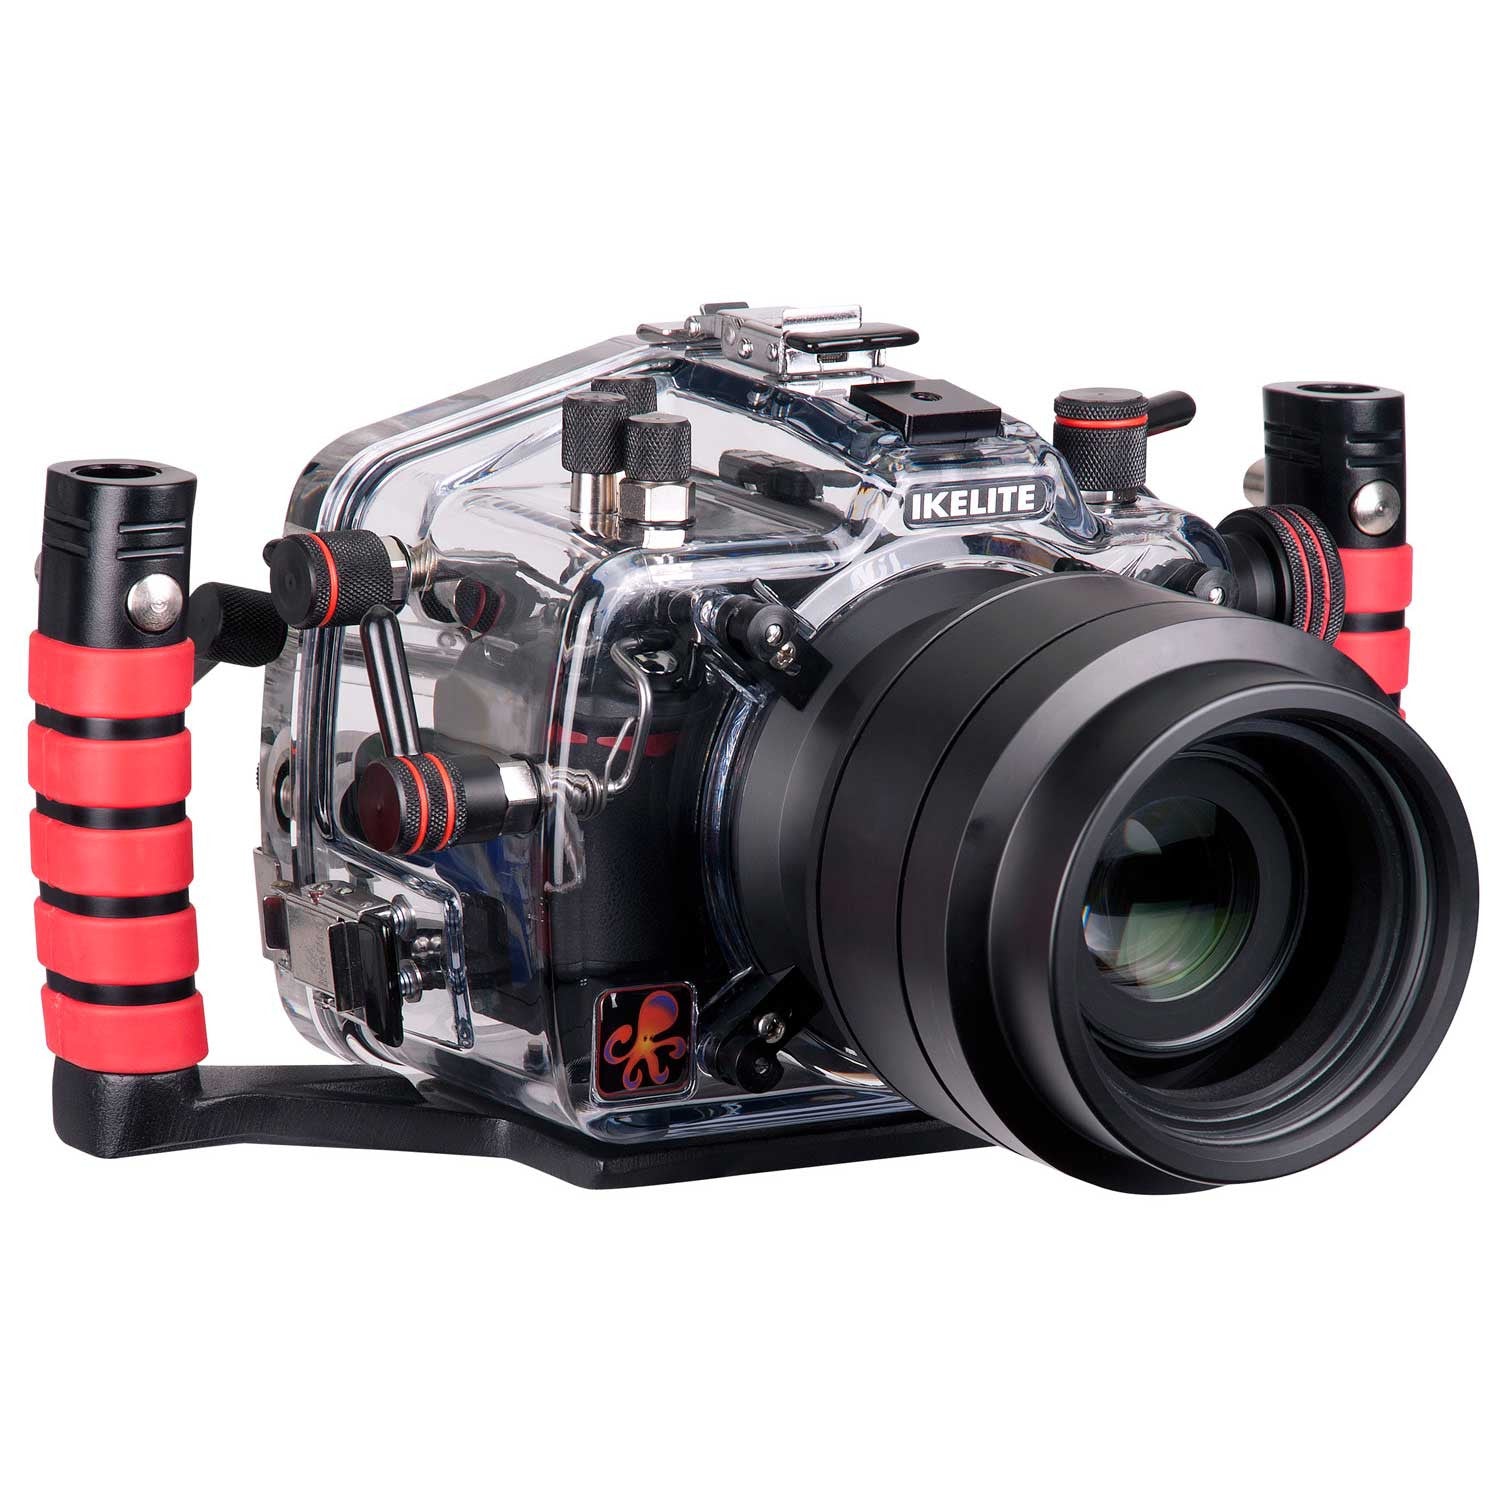 200FL Underwater TTL Housing for Nikon D3100 DSLR Cameras